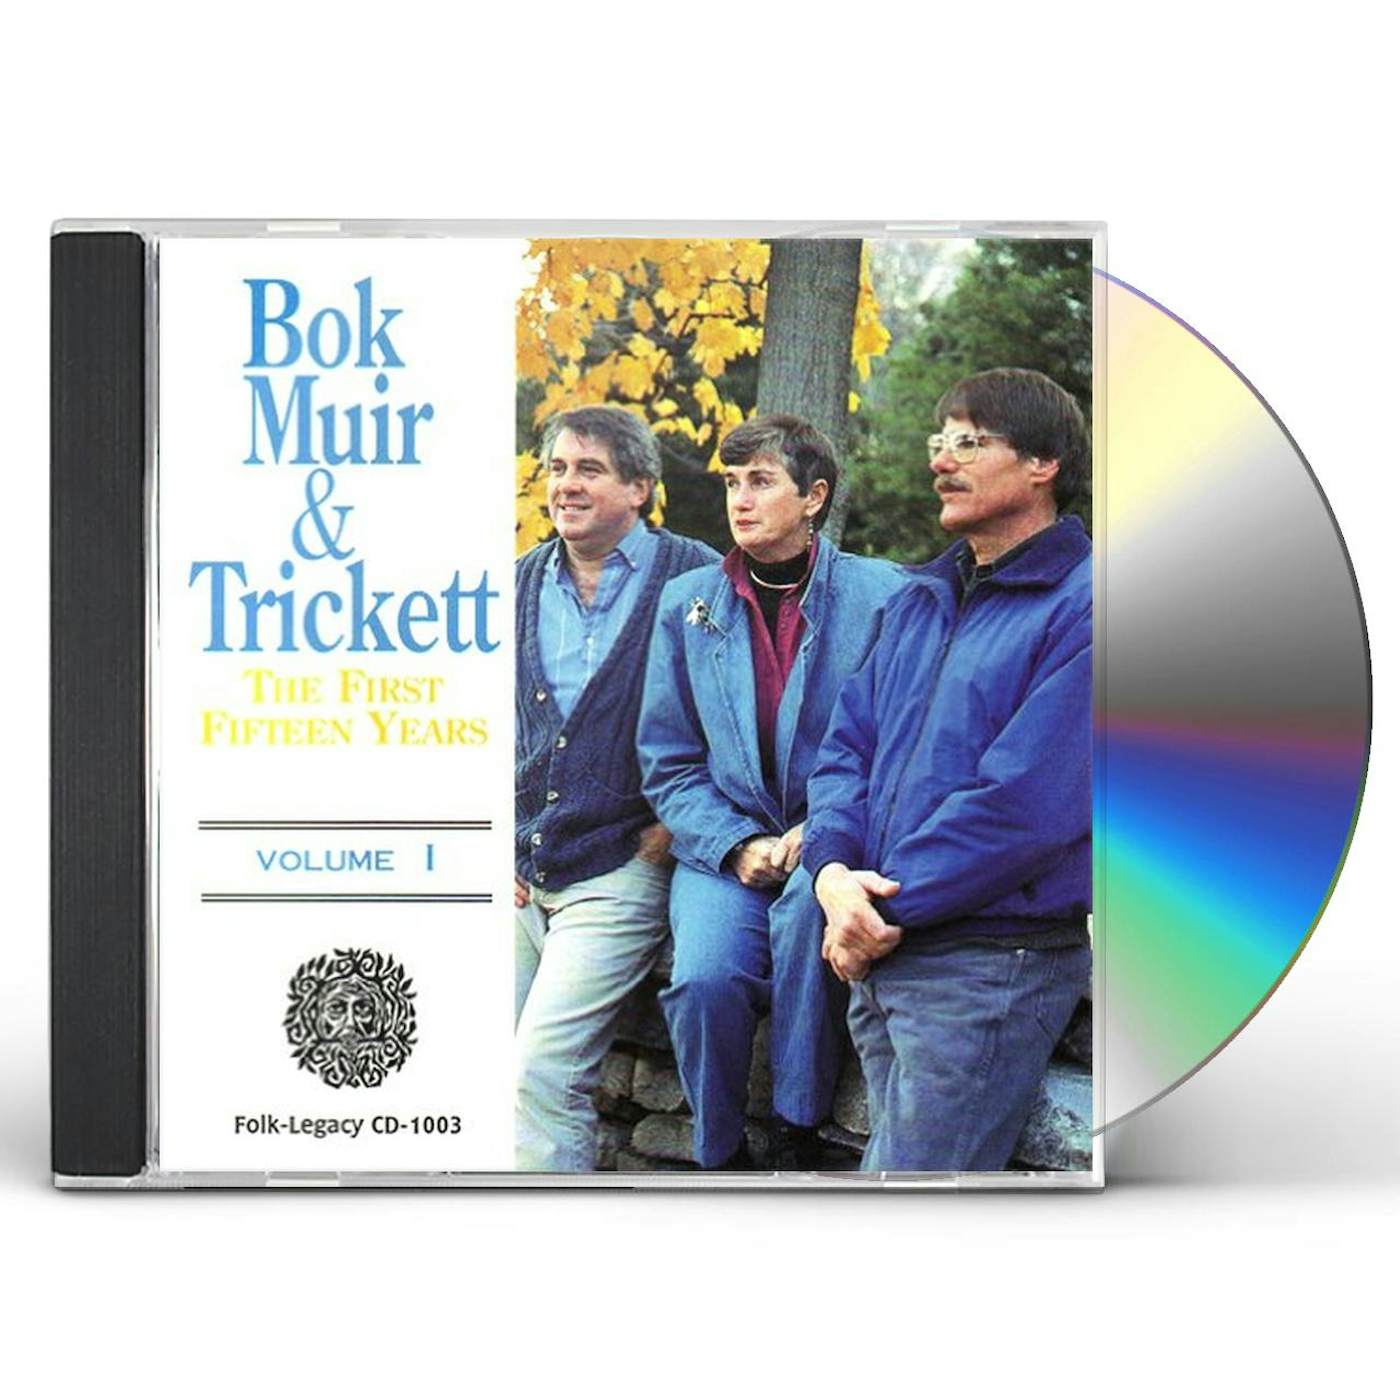 Gordon Bok, Ed Trickett, Ann Mayo Muir FIRST FIFTEEN YEARS 1 CD